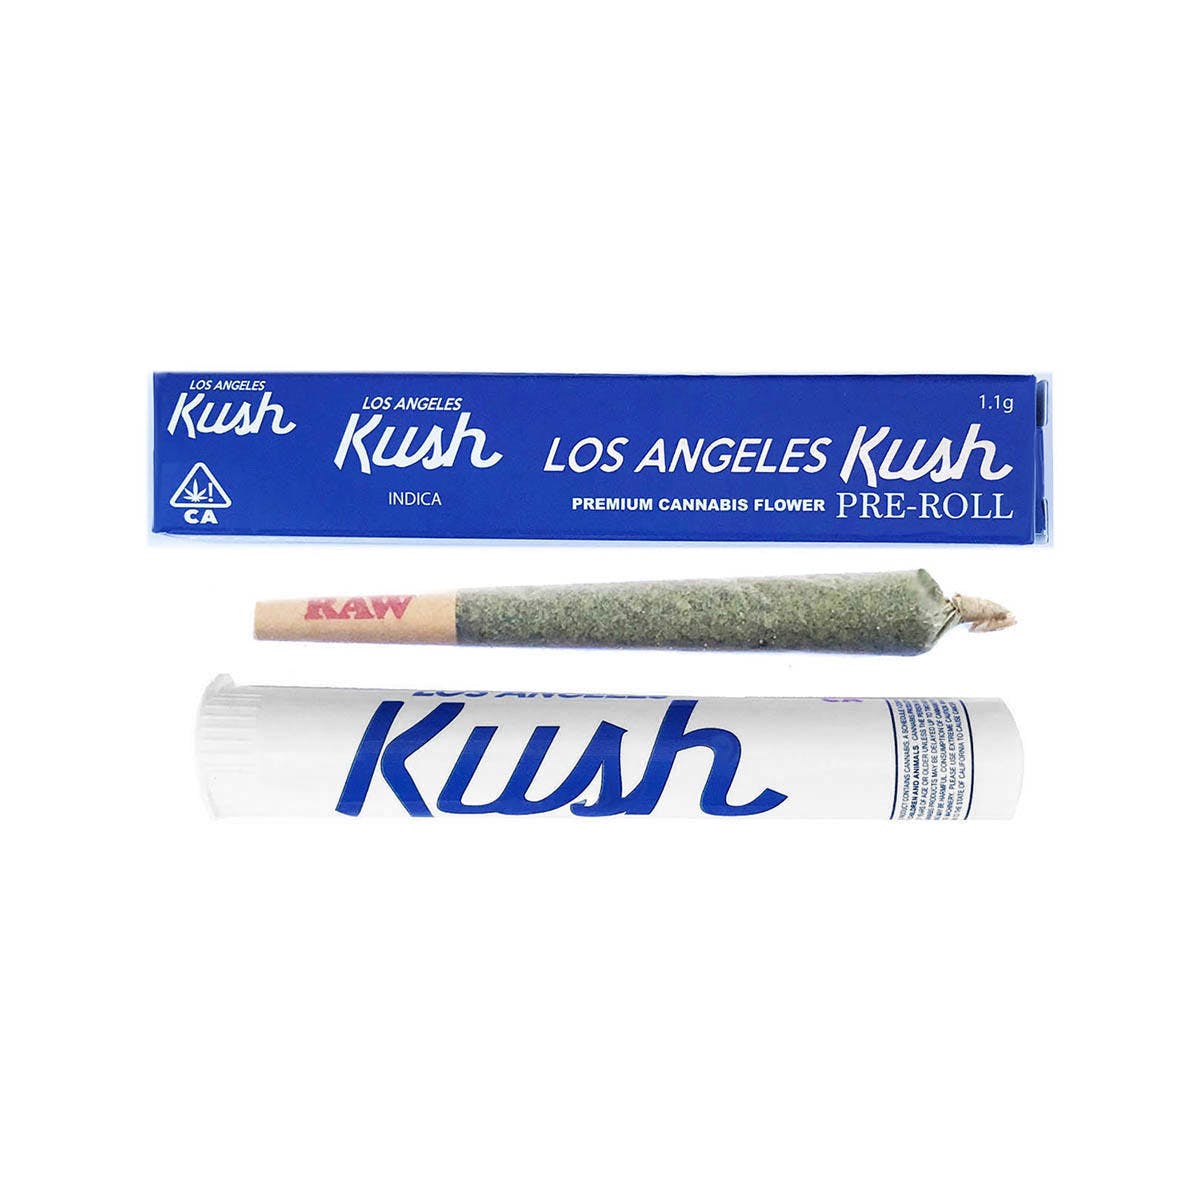 marijuana-dispensaries-6420-wilmington-ave-los-angeles-los-angeles-kush-lak-pre-roll-1g